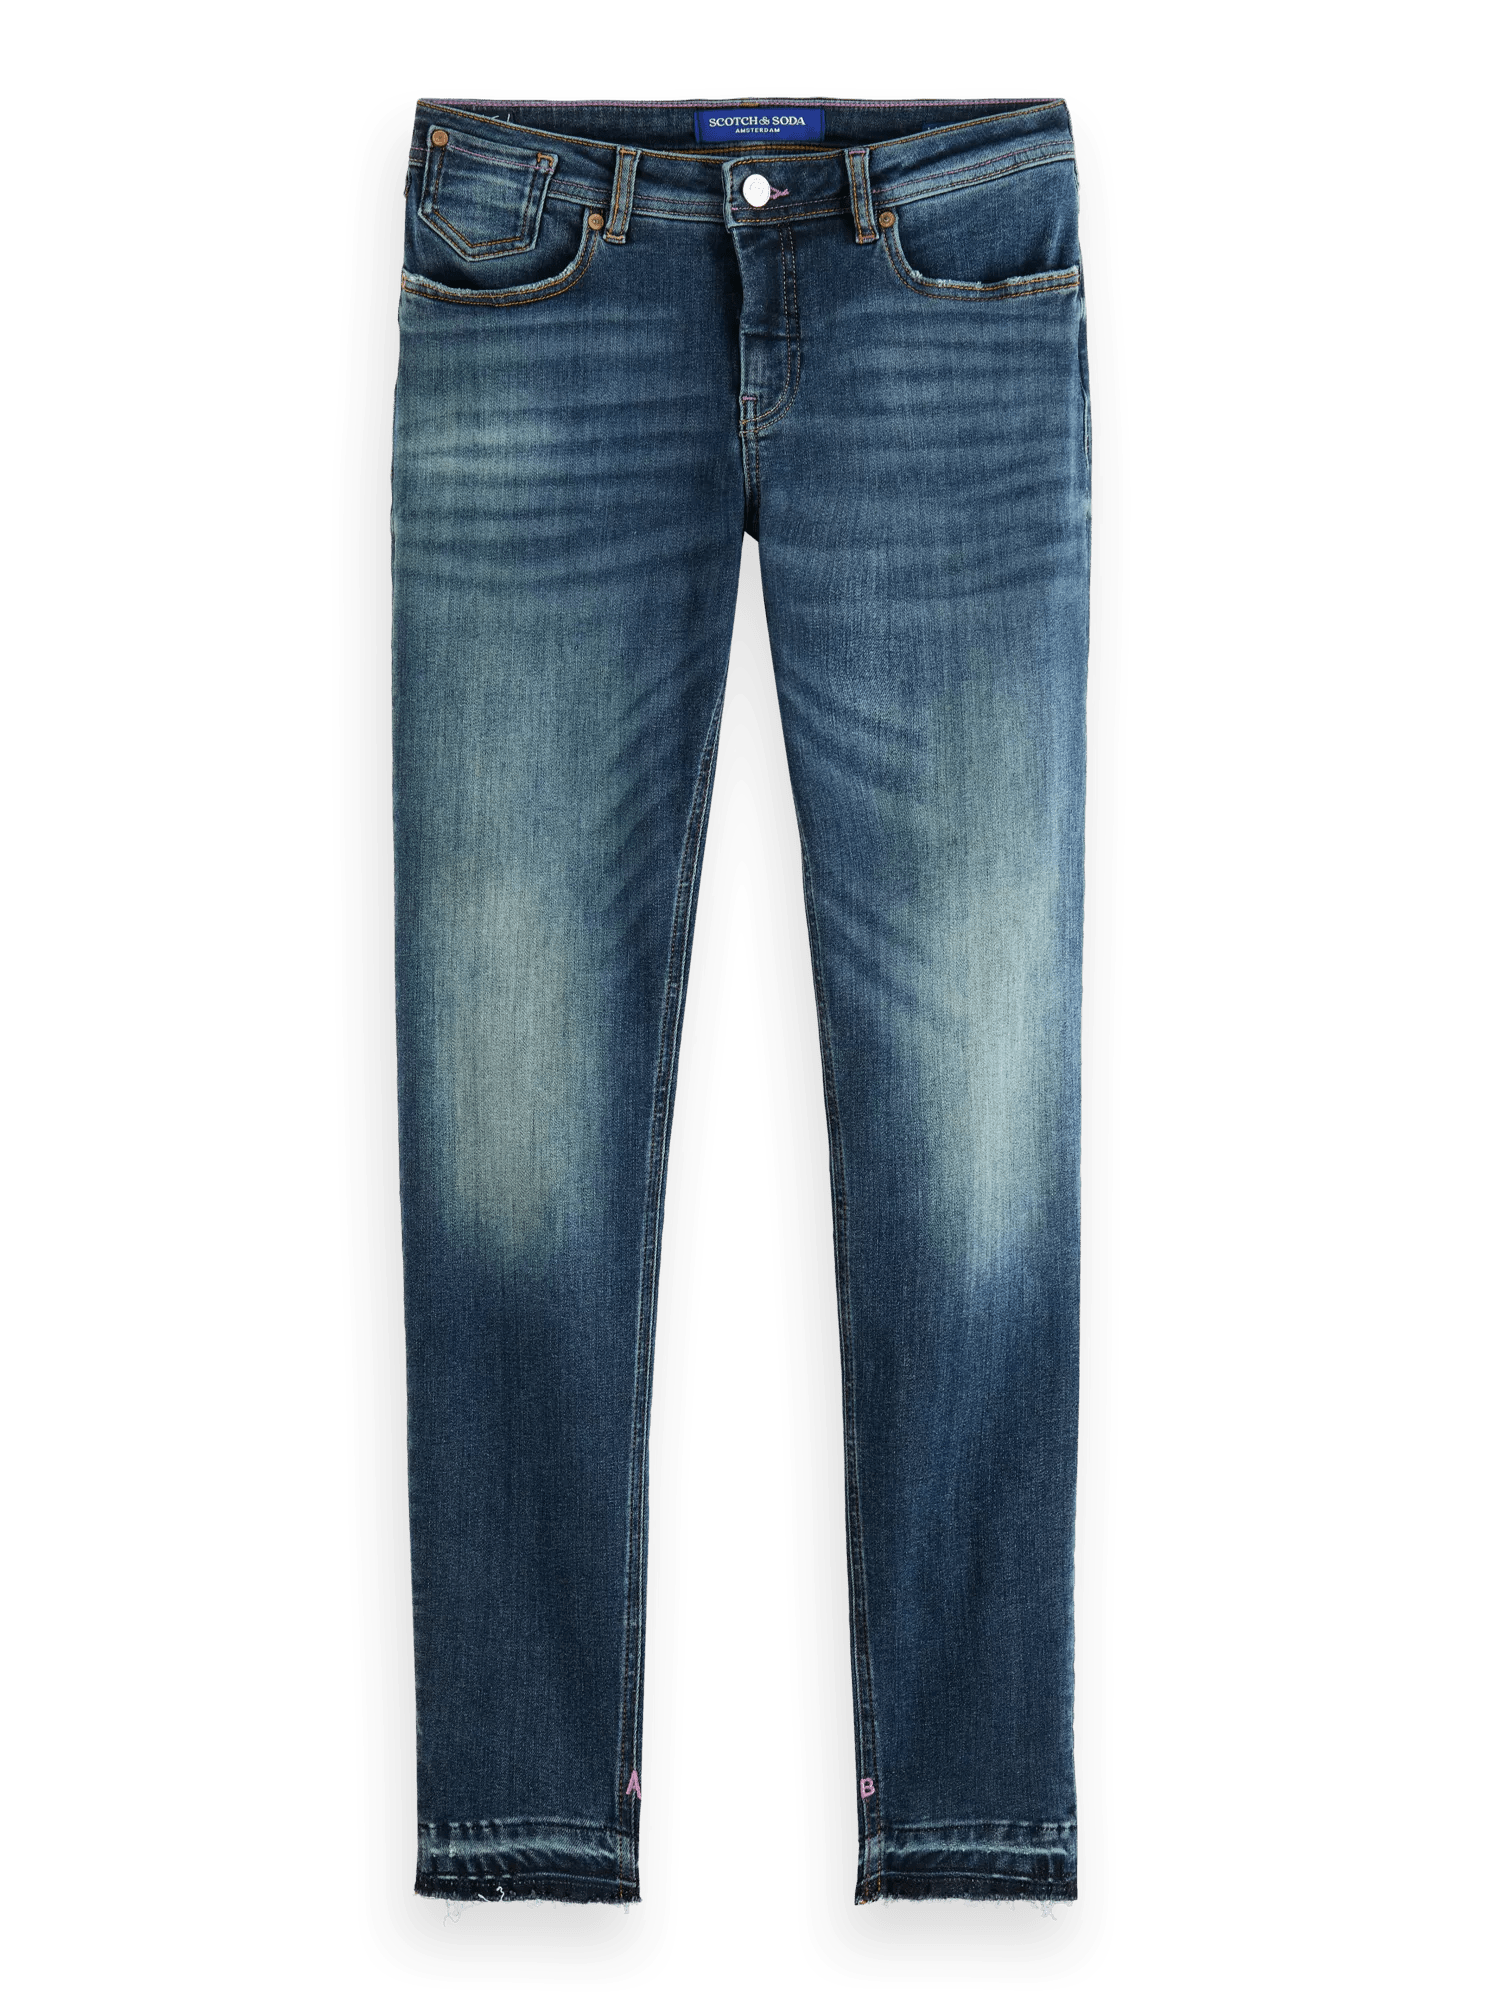 Scotch & Soda La Bohemienne mid-rise skinny jeans FNT